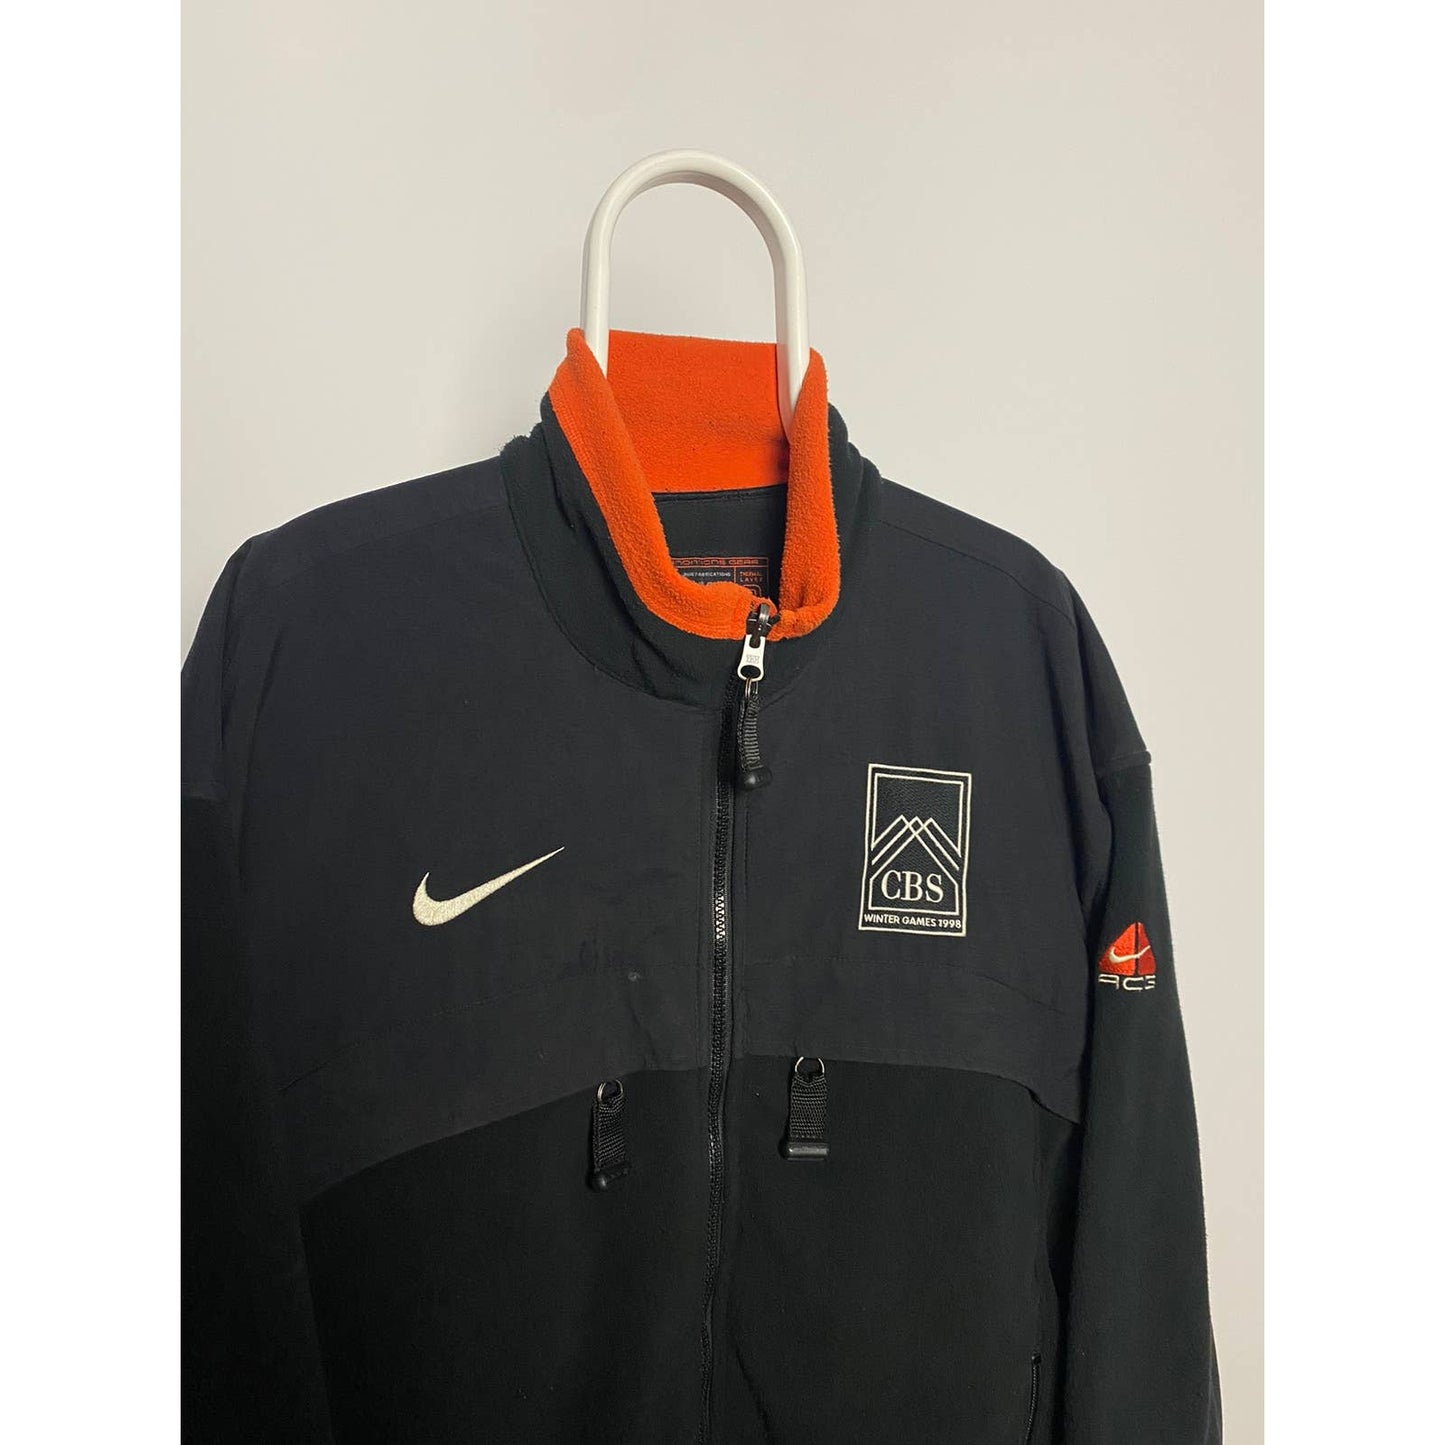 Nike ACG vintage cargo fleece jacket black 2000s 90s